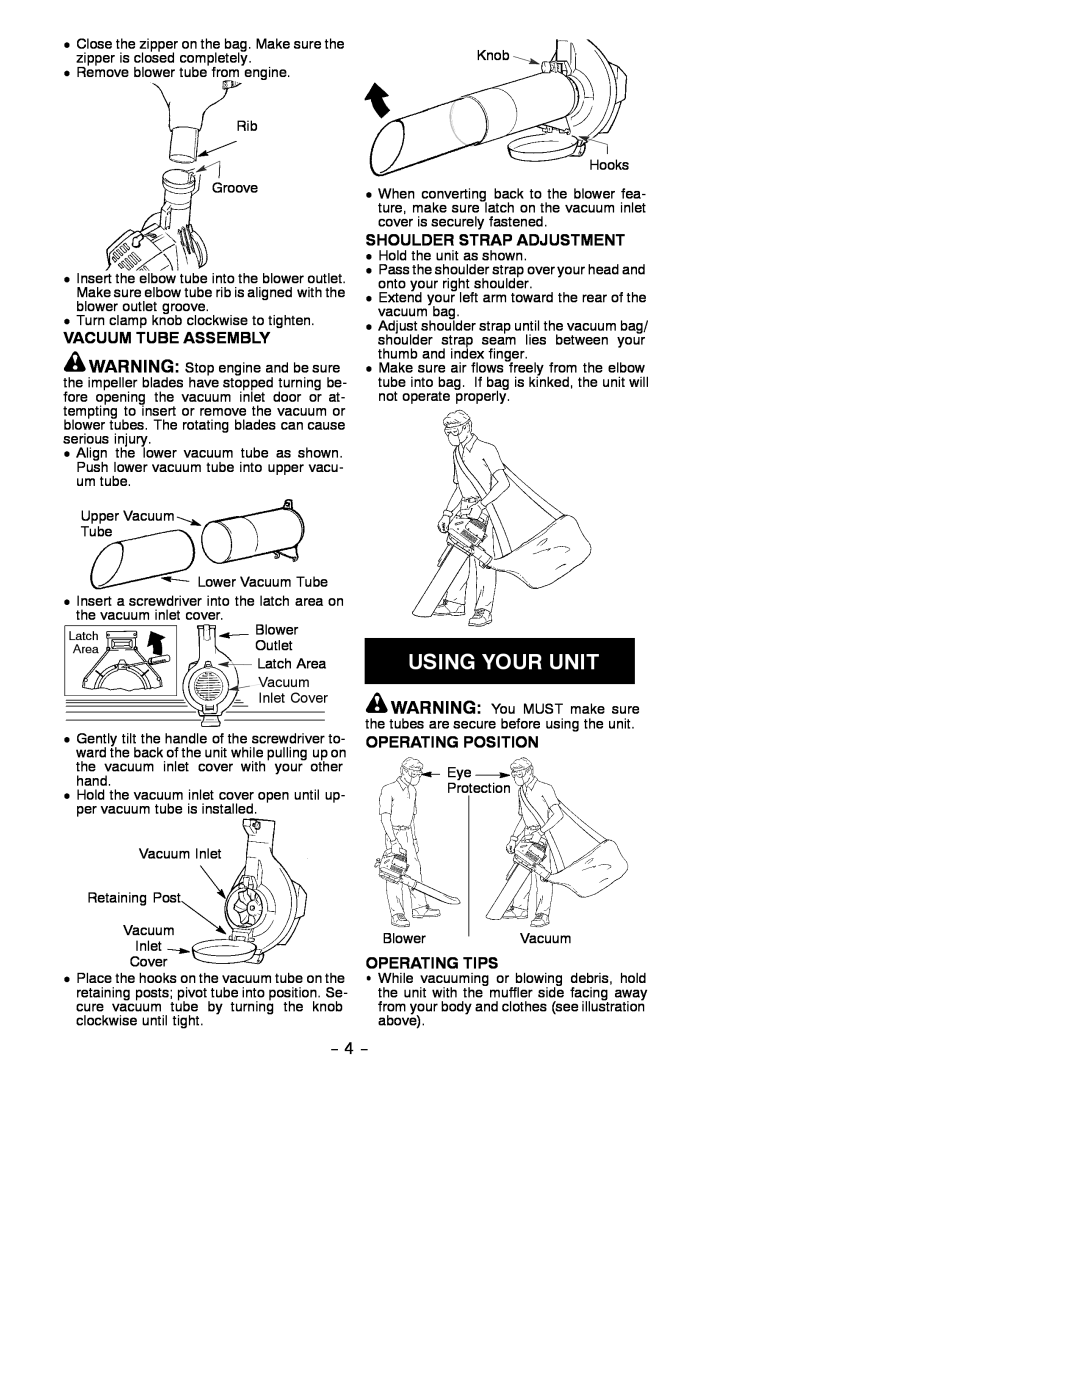 Poulan 530088073 instruction manual Vacuum Tube Assembly, Shoulder Strap Adjustment, Operating Position, Operating Tips 